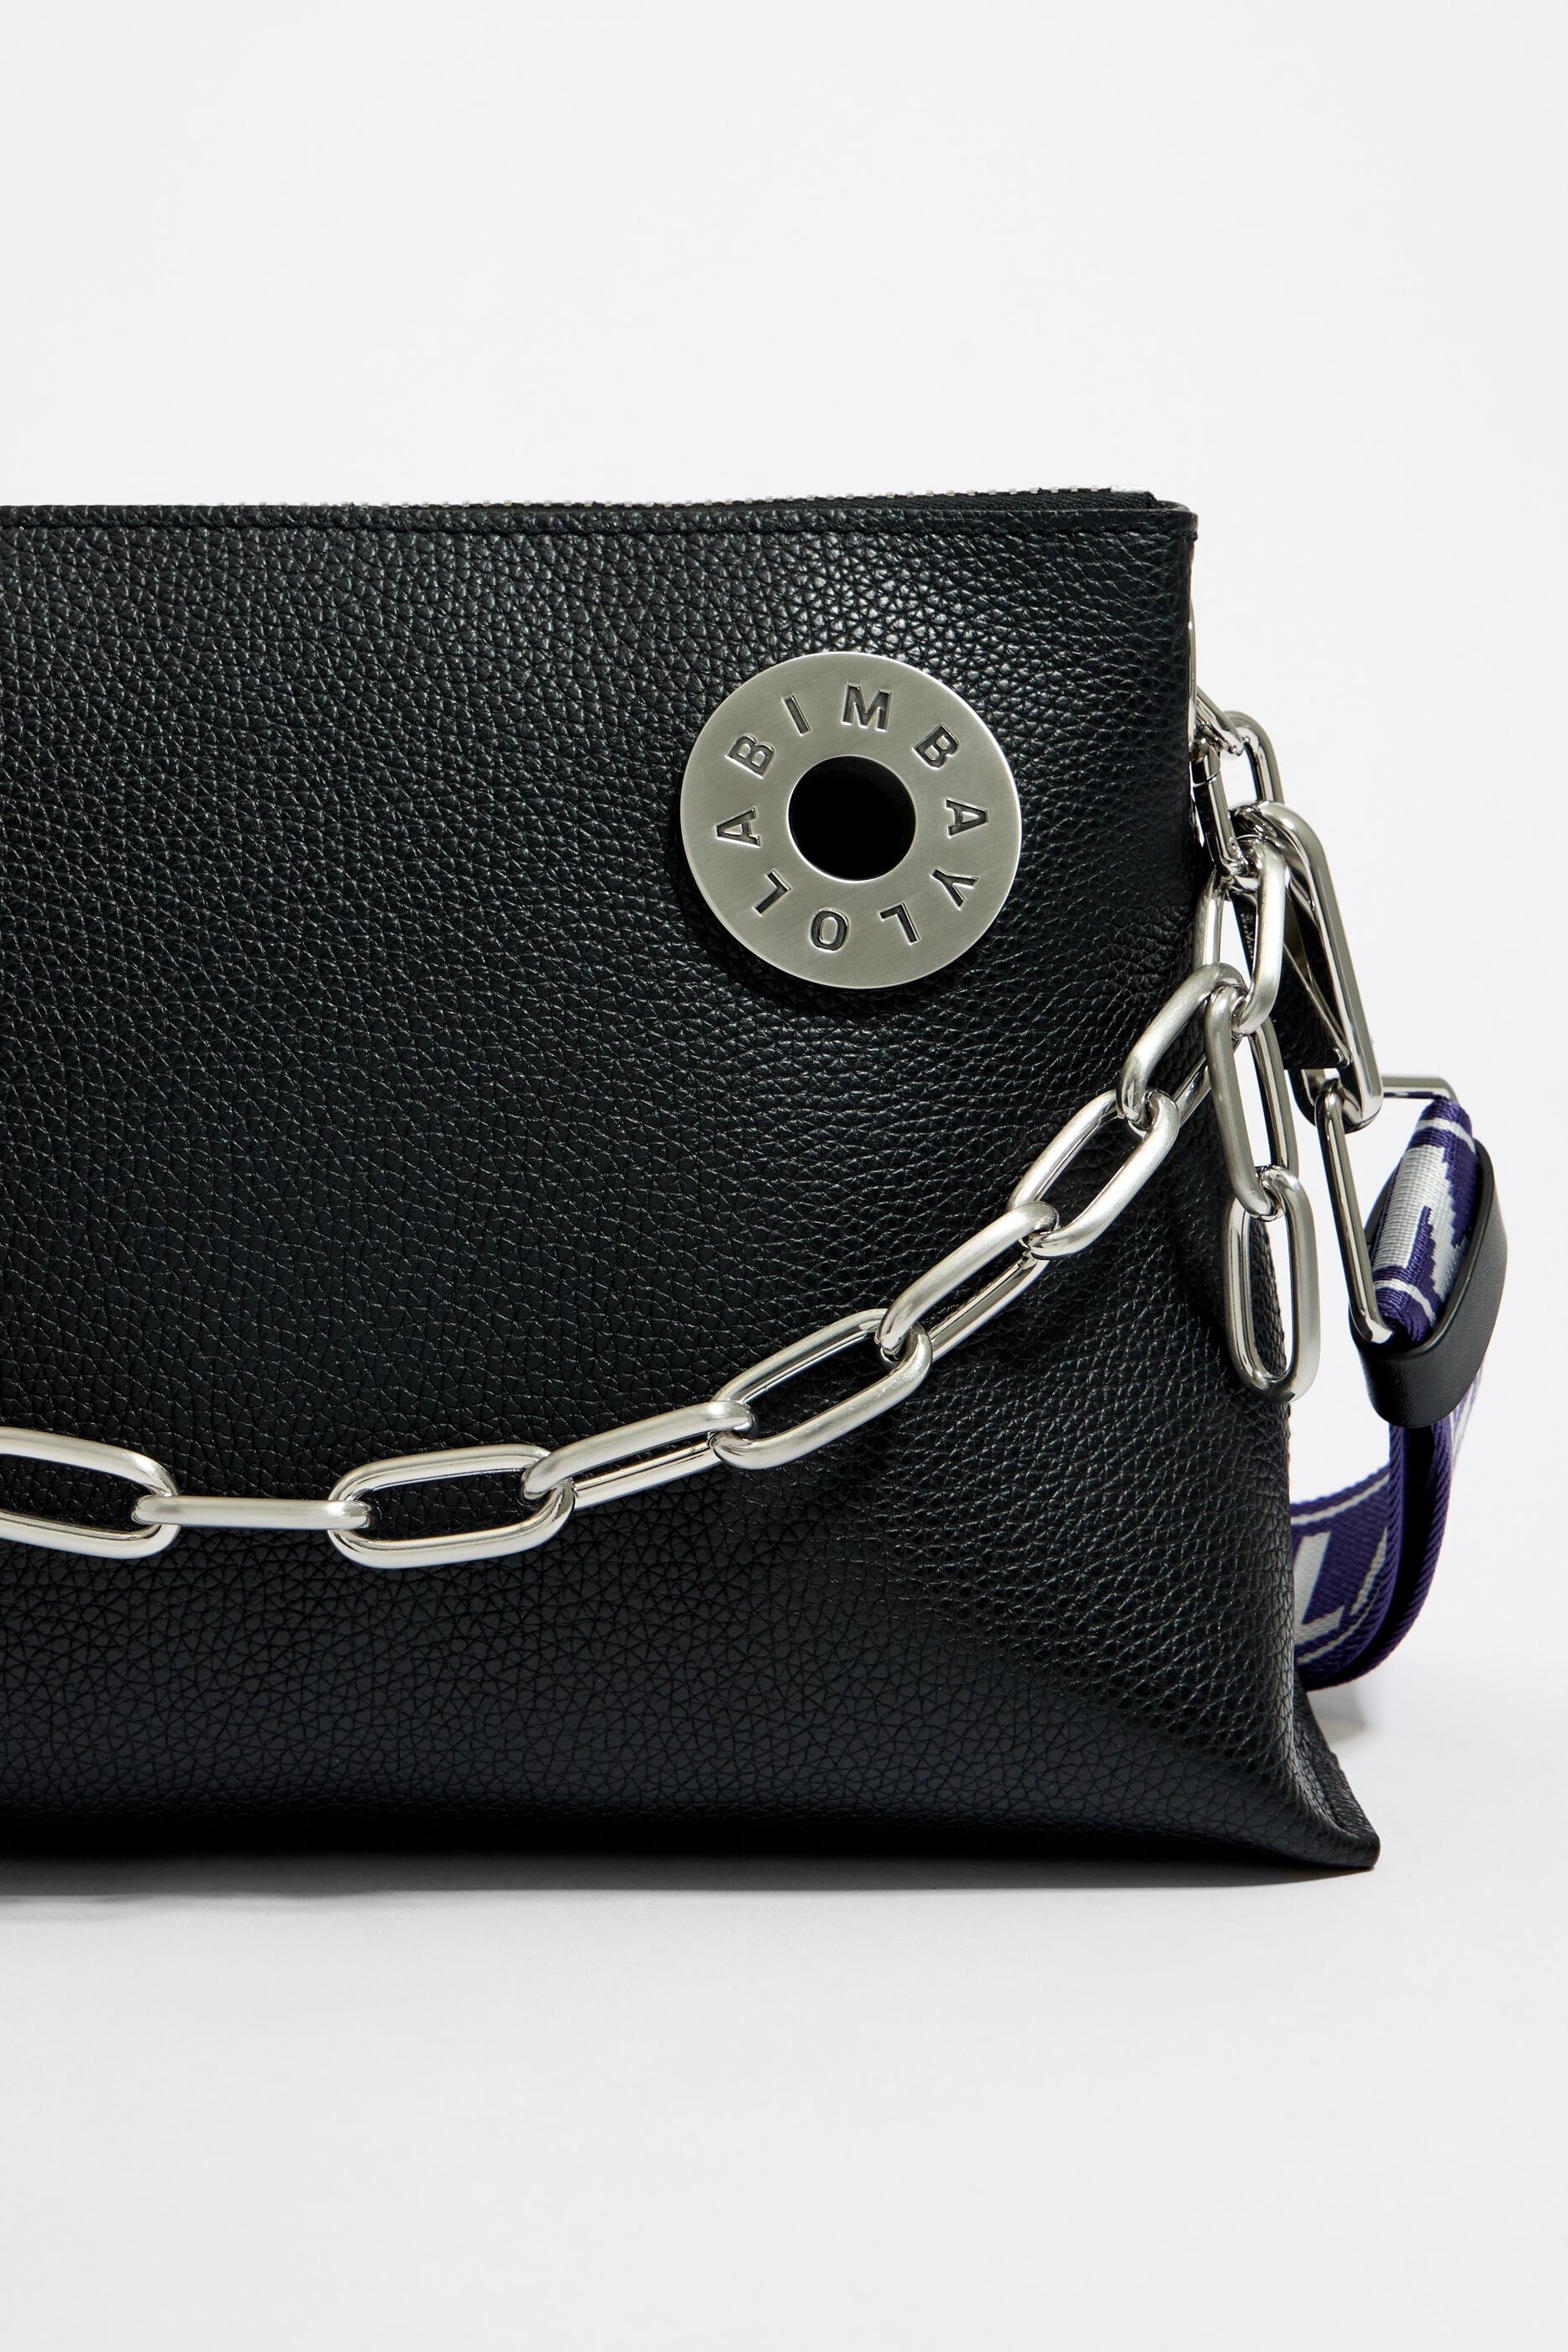 Medium Vegan Leather Purse for Women, Black Crossbody Top-Handle Handbag,  Shoulder Satchel Bag: Handbags: Amazon.com